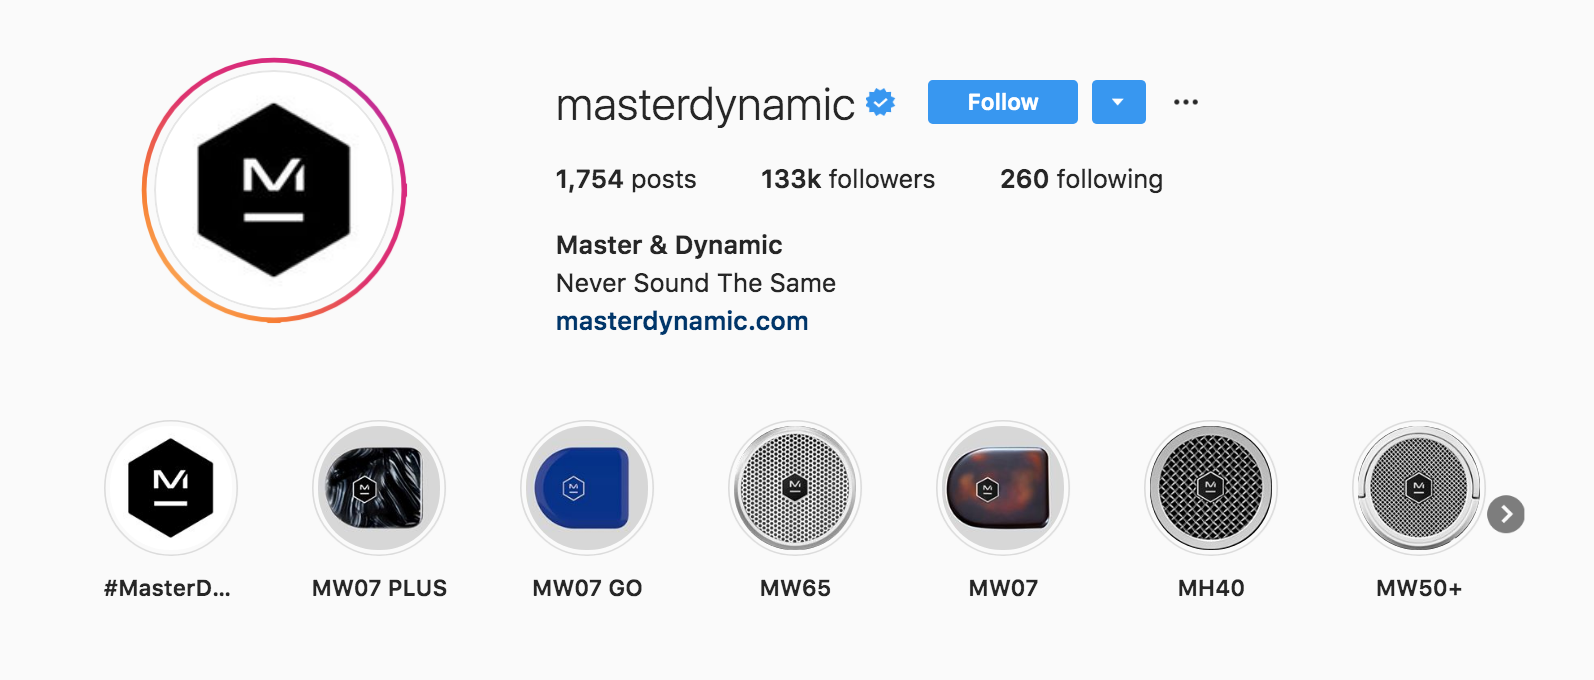 Master and Dynamic Instagram Bio